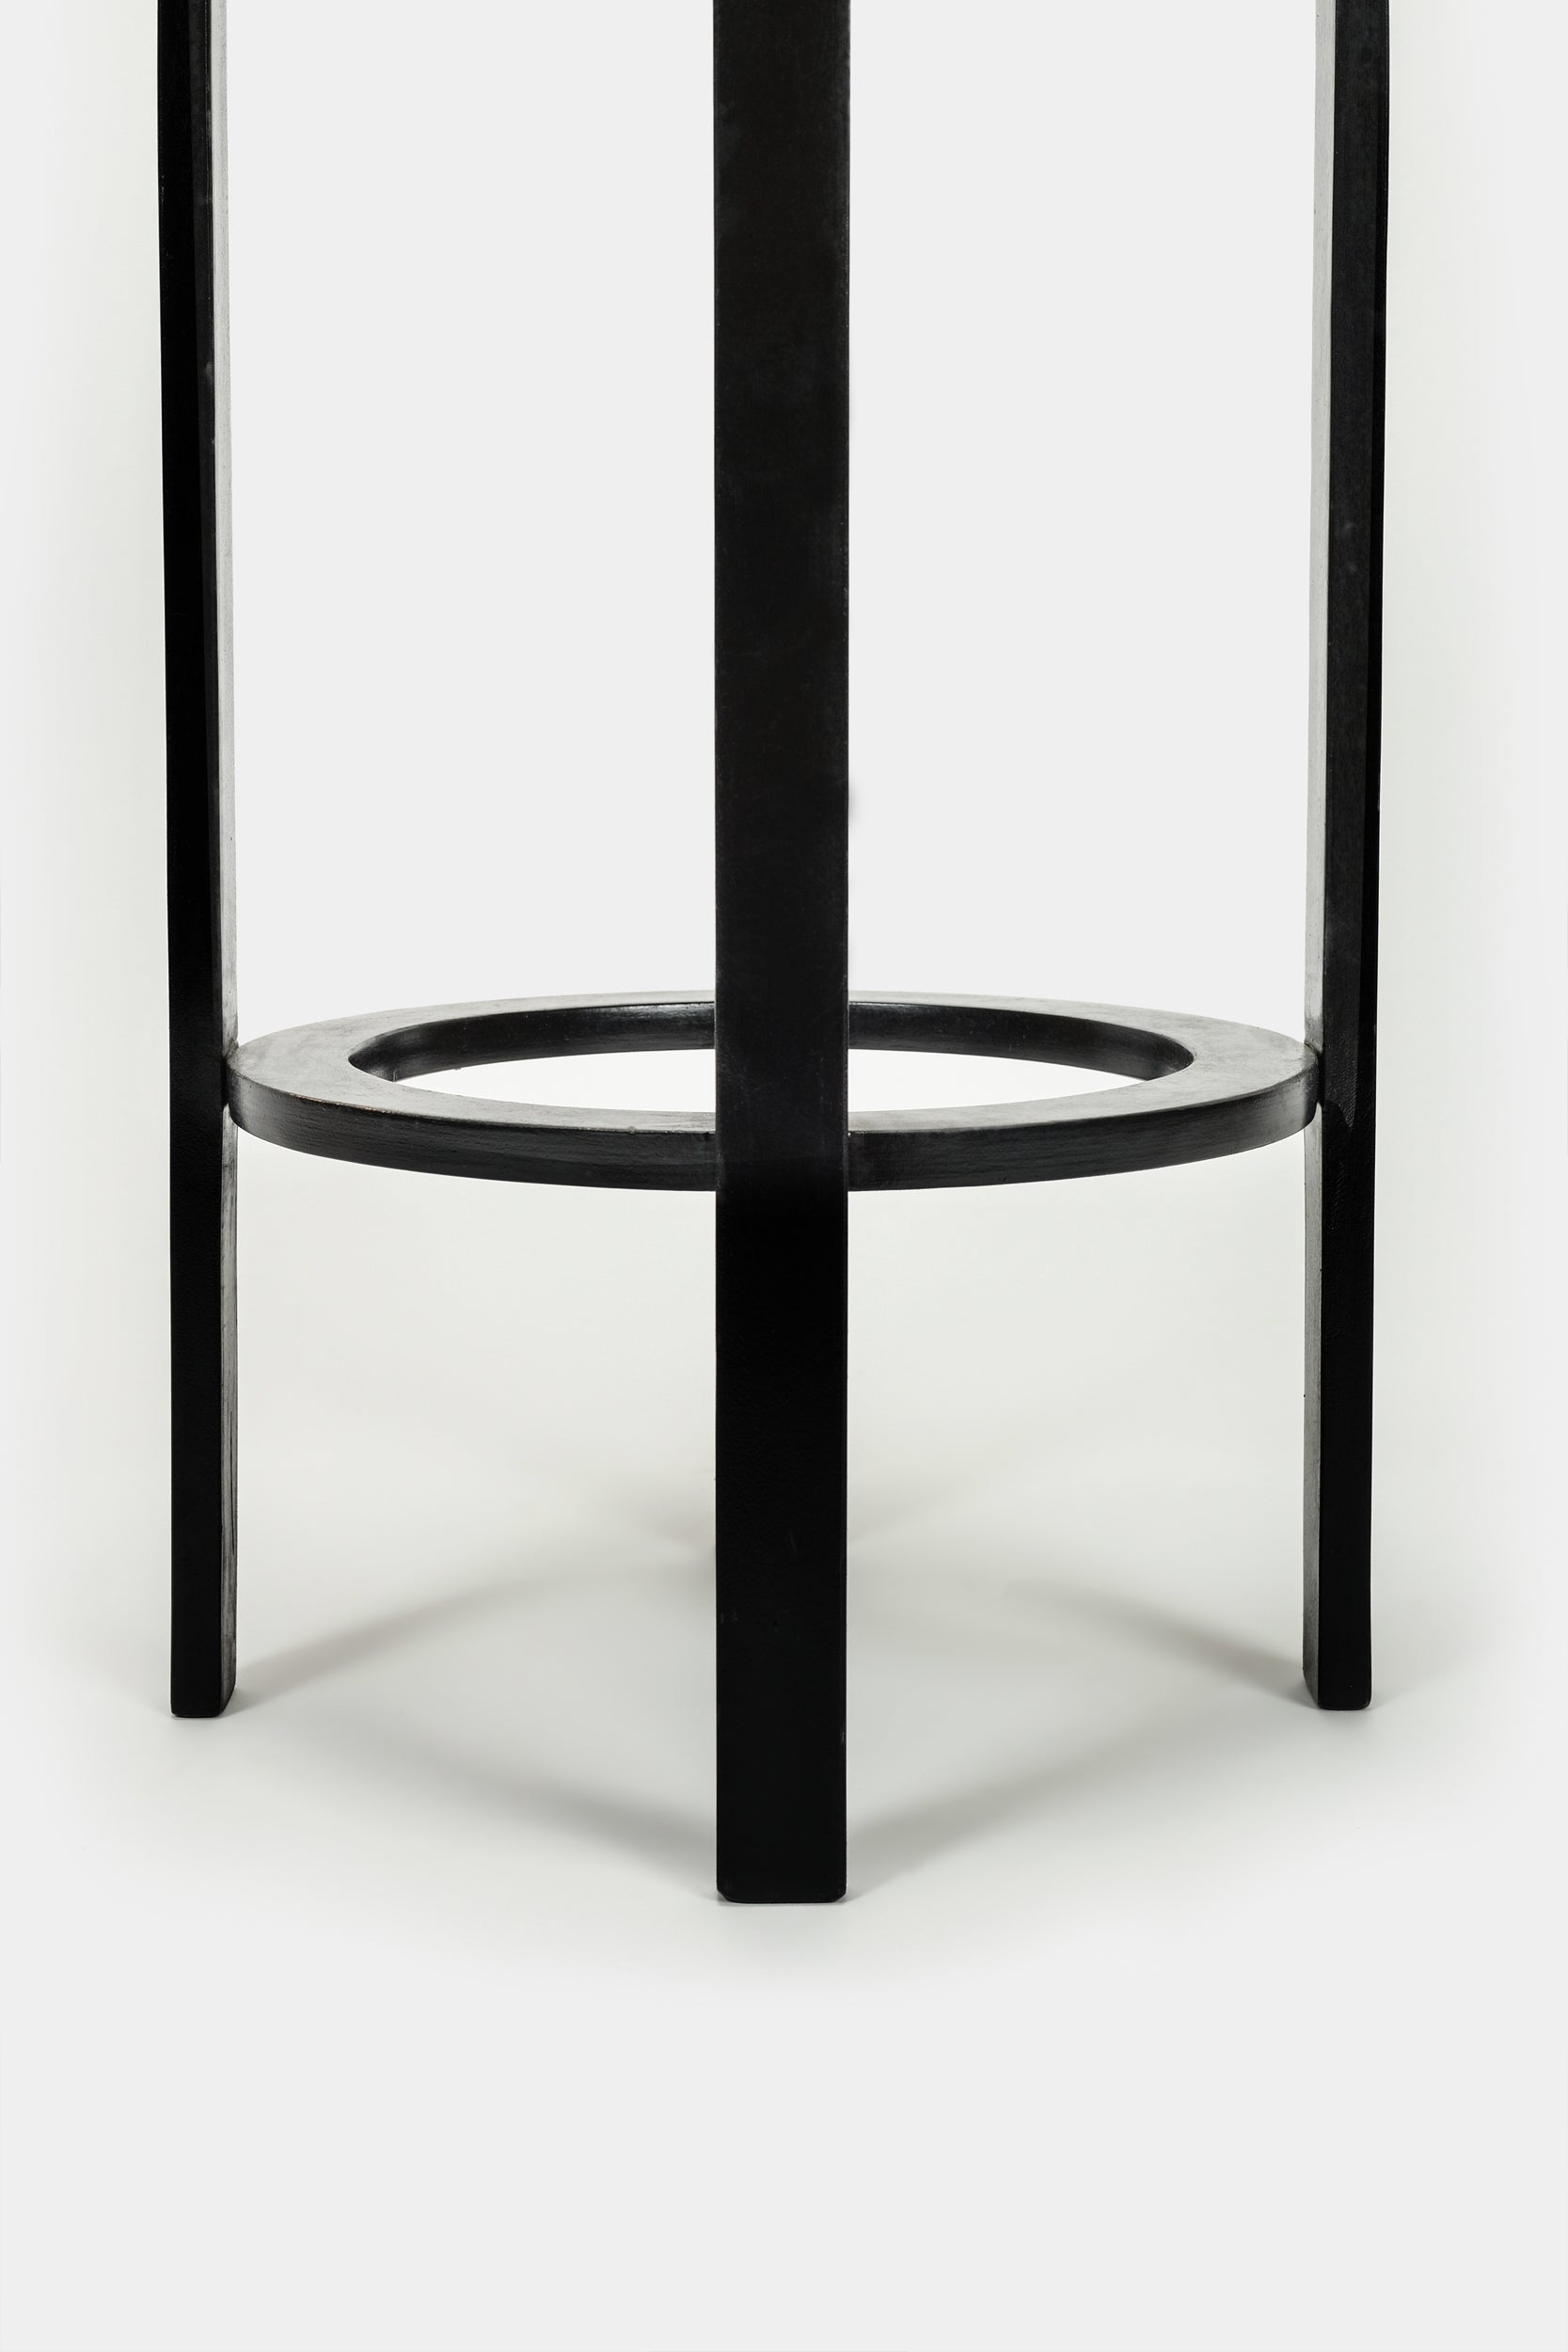 Alvar Aalto, two bar chairs, Artek, Model 64, 40s